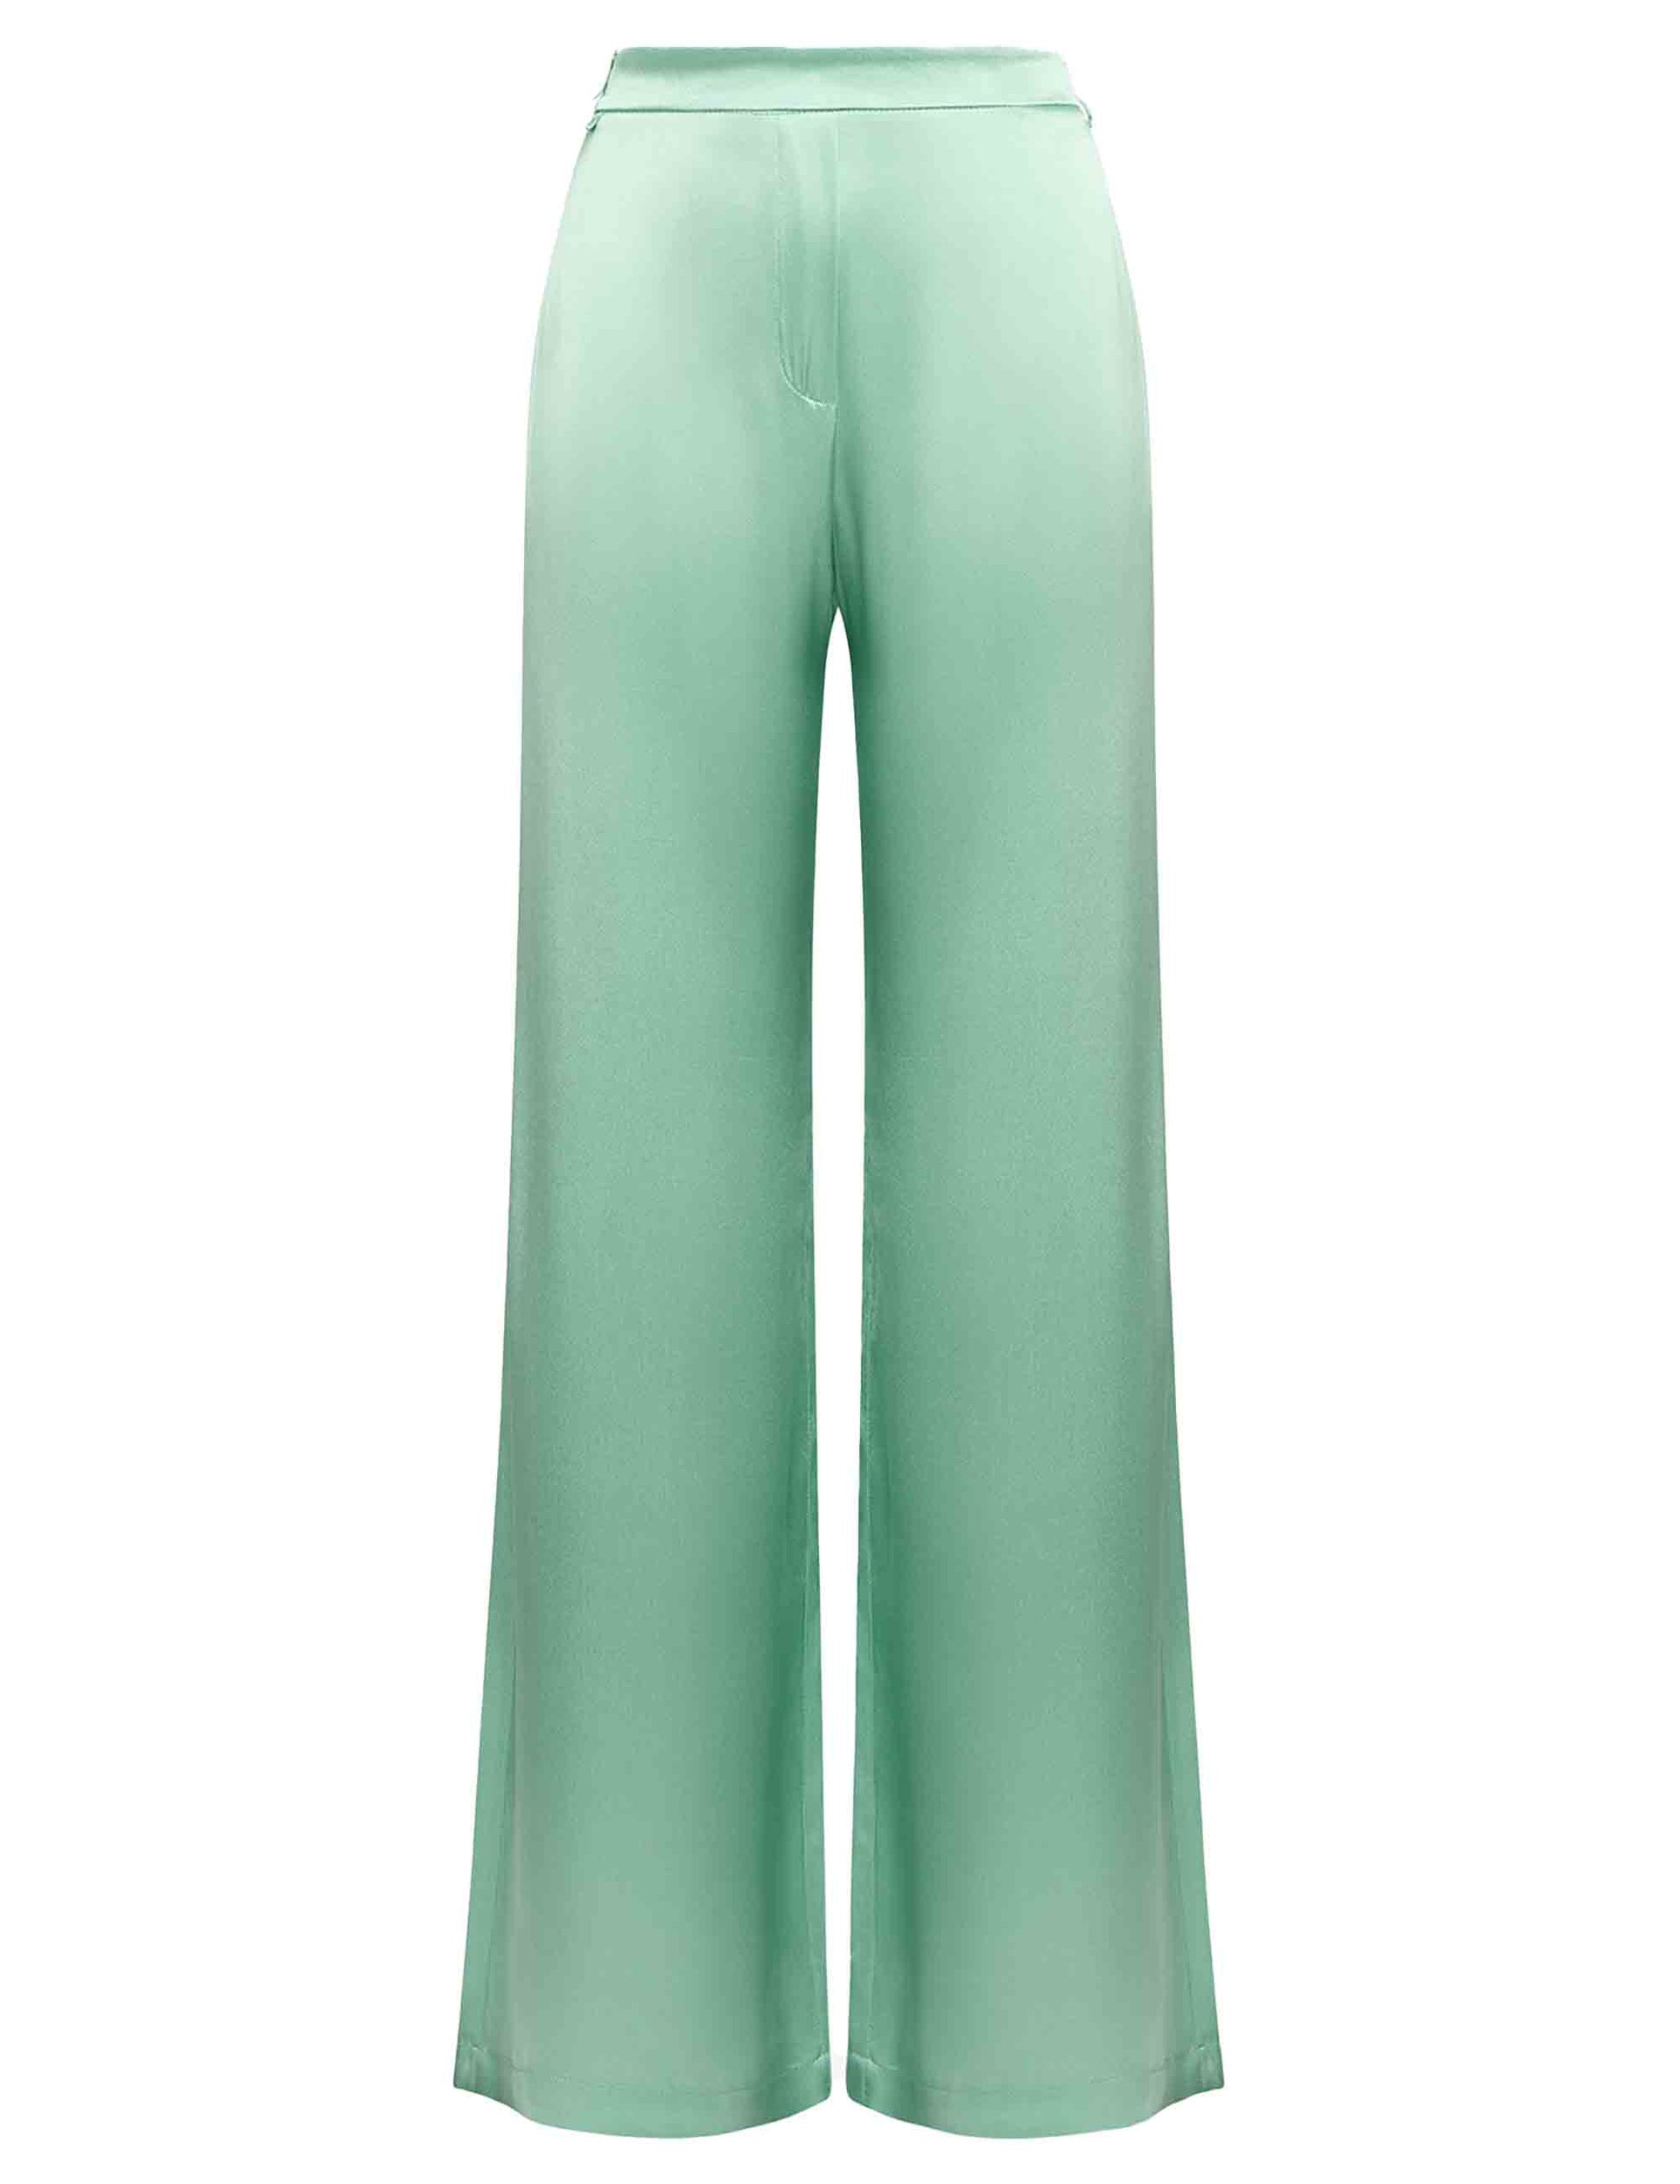 Pantaloni donna Shiny in cady verde a gamba larga